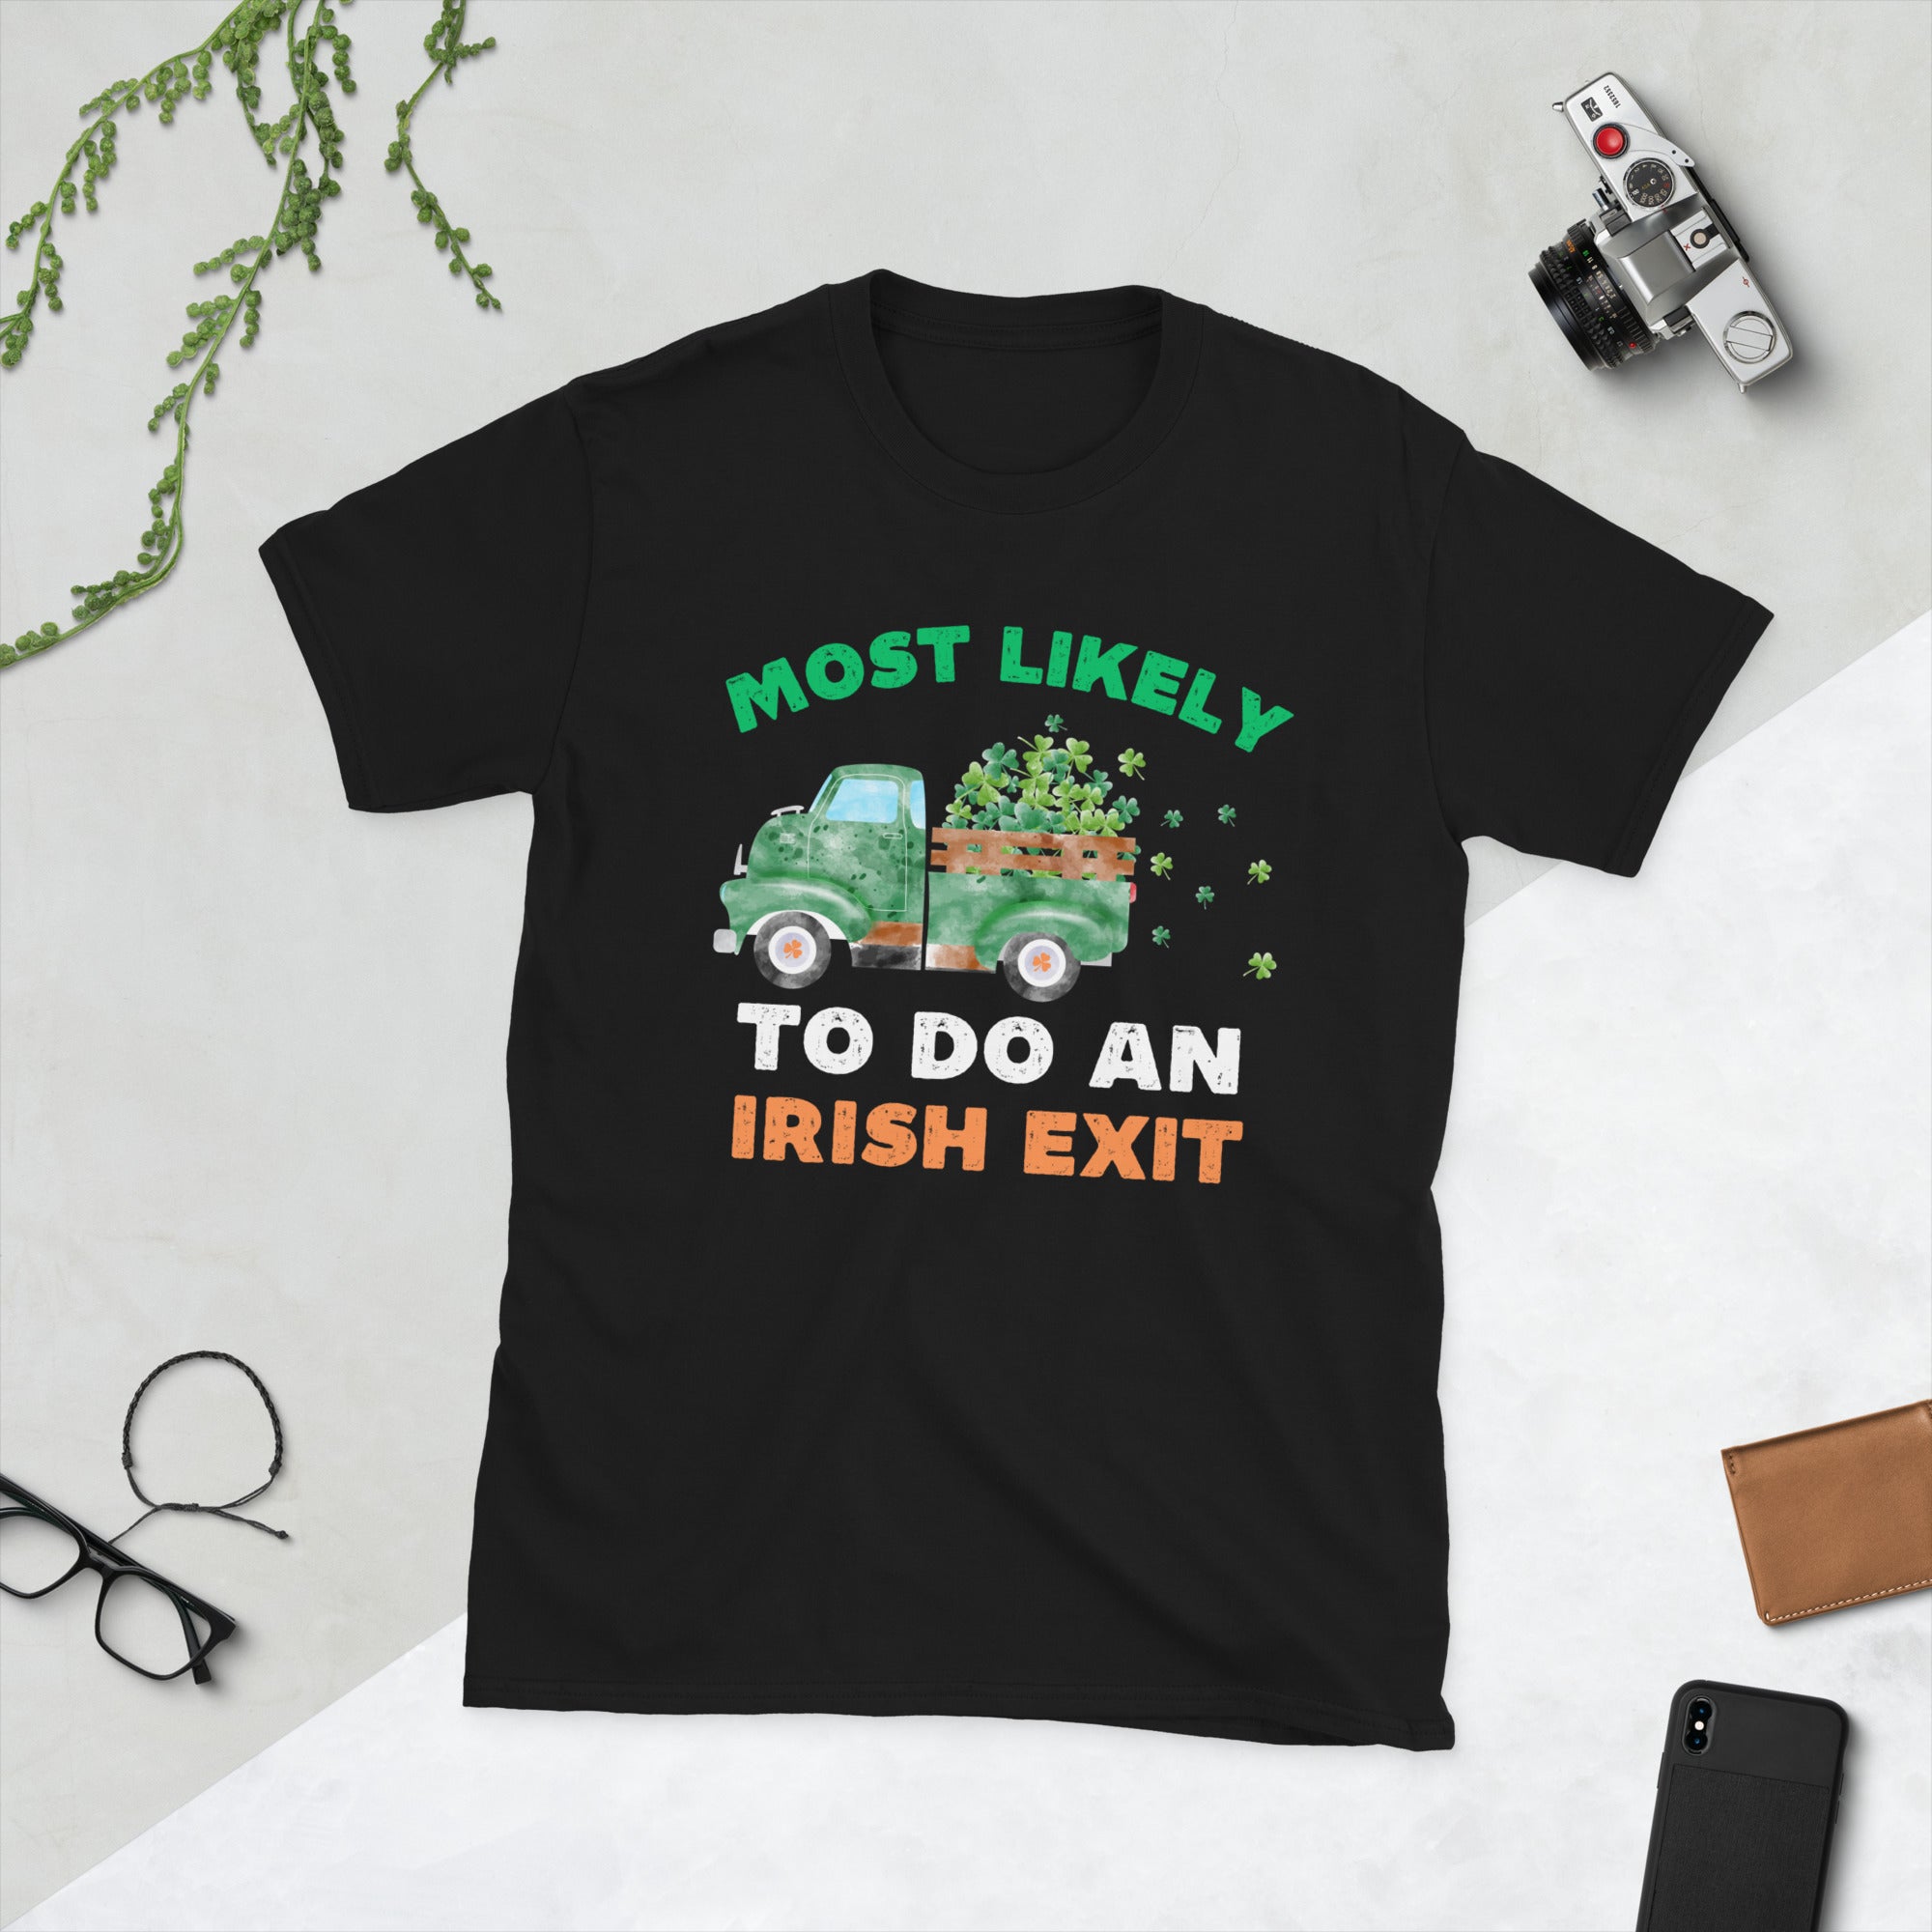 Most Likely To Do An Irish Exit Shirt, St Patricks Day Party Group Matching Tshirts, St Patricks Day Tee, Irish Gifts, Shamrock T Shirt